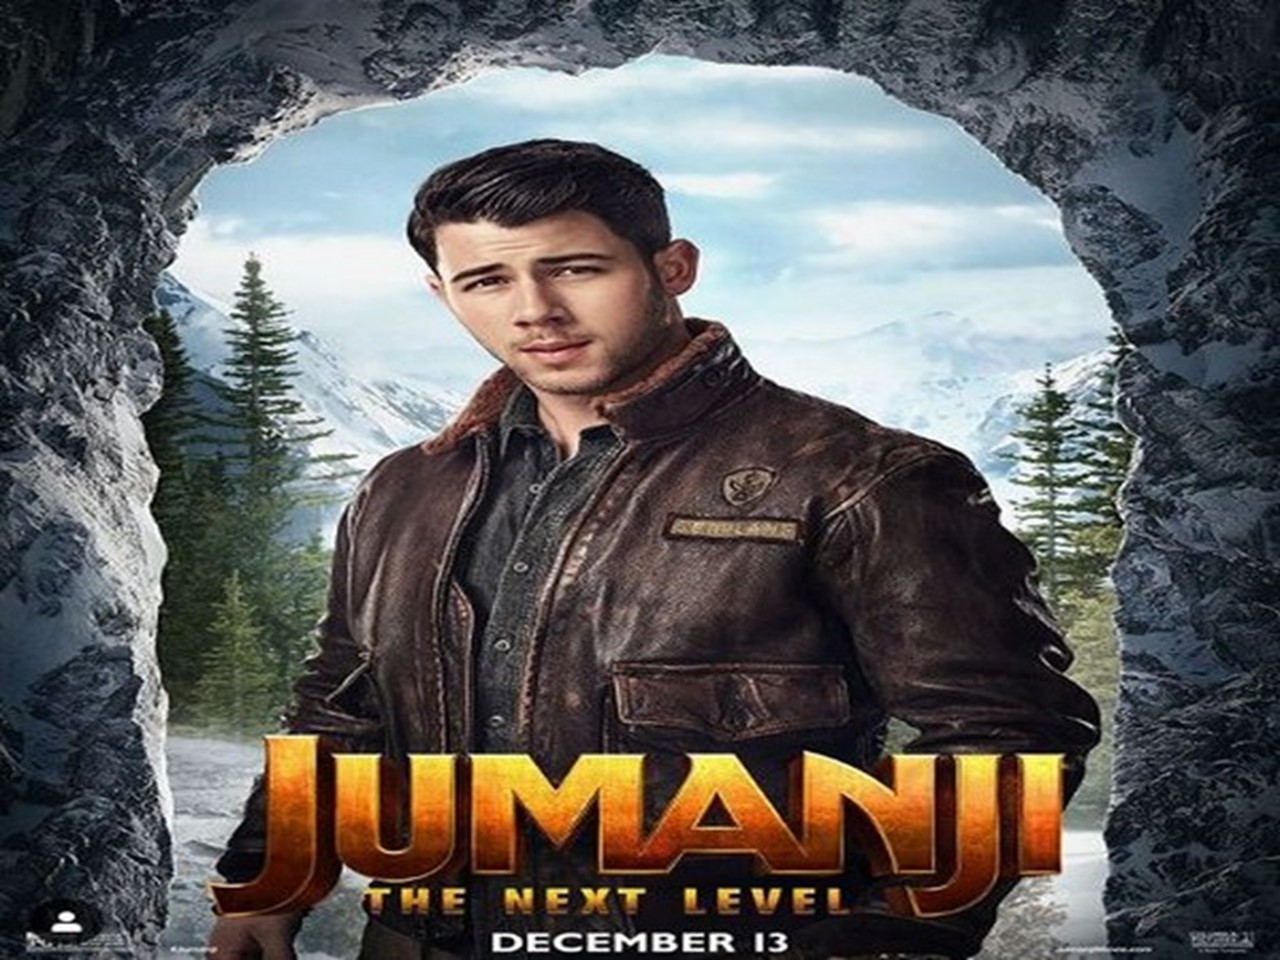 Nick Jonas' Cut Out Makes Appearance at 'Jumanji: The Next Level